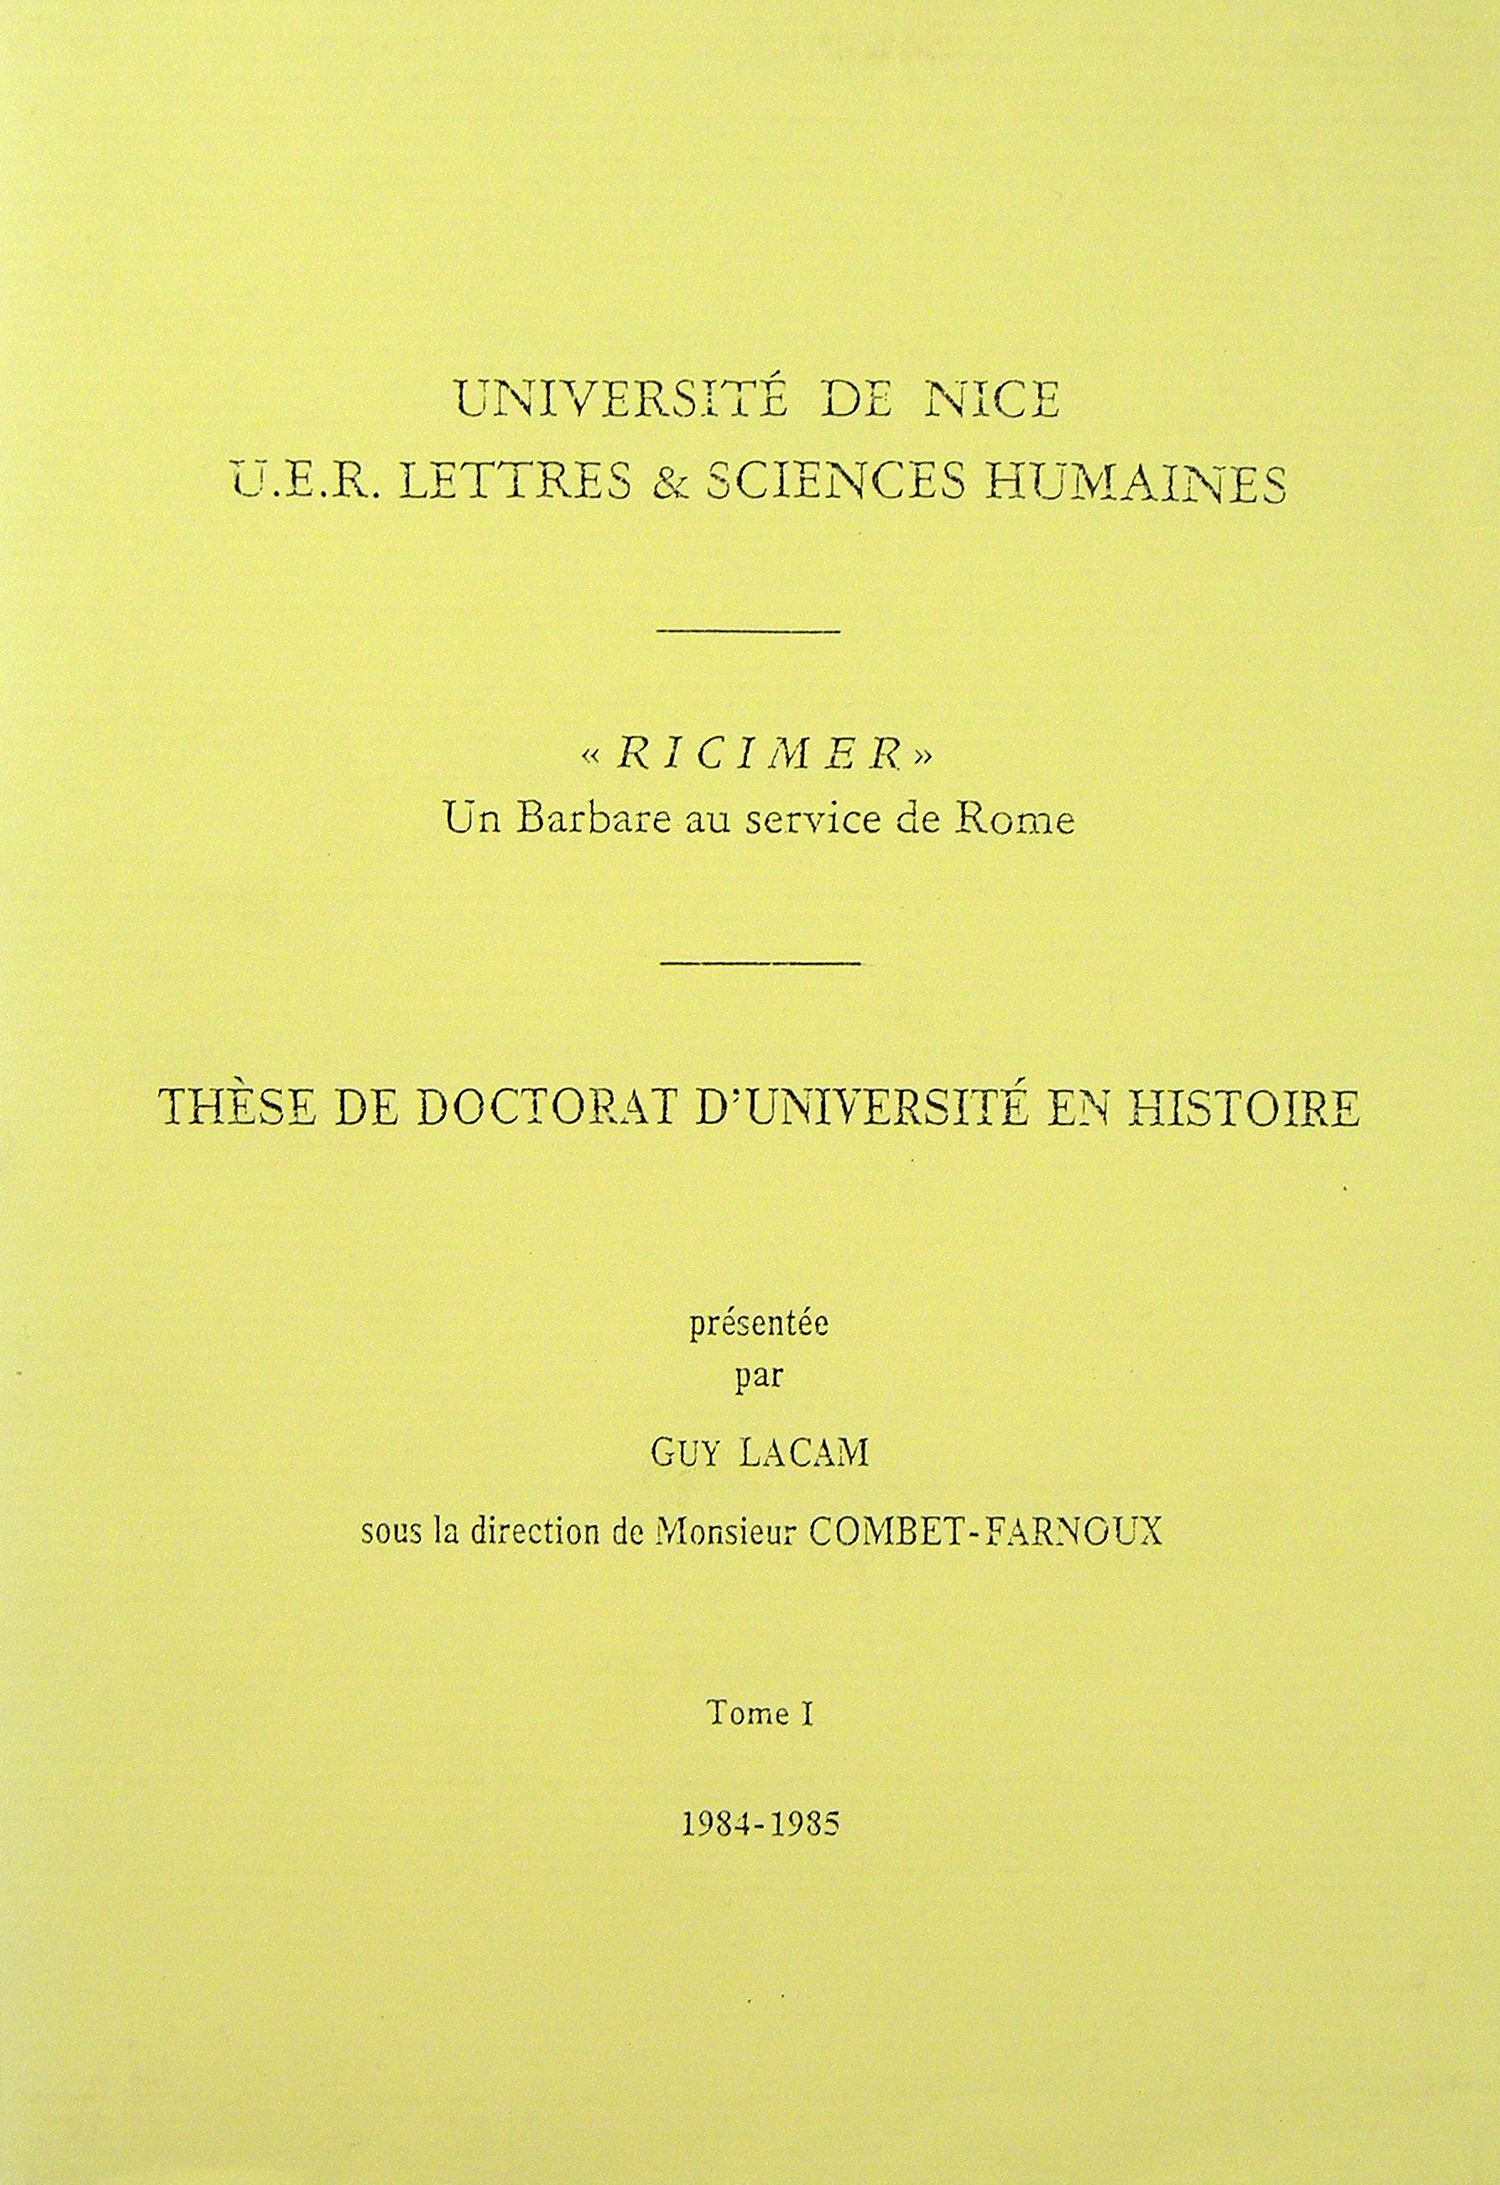 Lacam, Guy. “RICIMER”: UN BARBARE AU SERVICE DE ROME. Nice, 1985. Two volumes. 4to, original printed